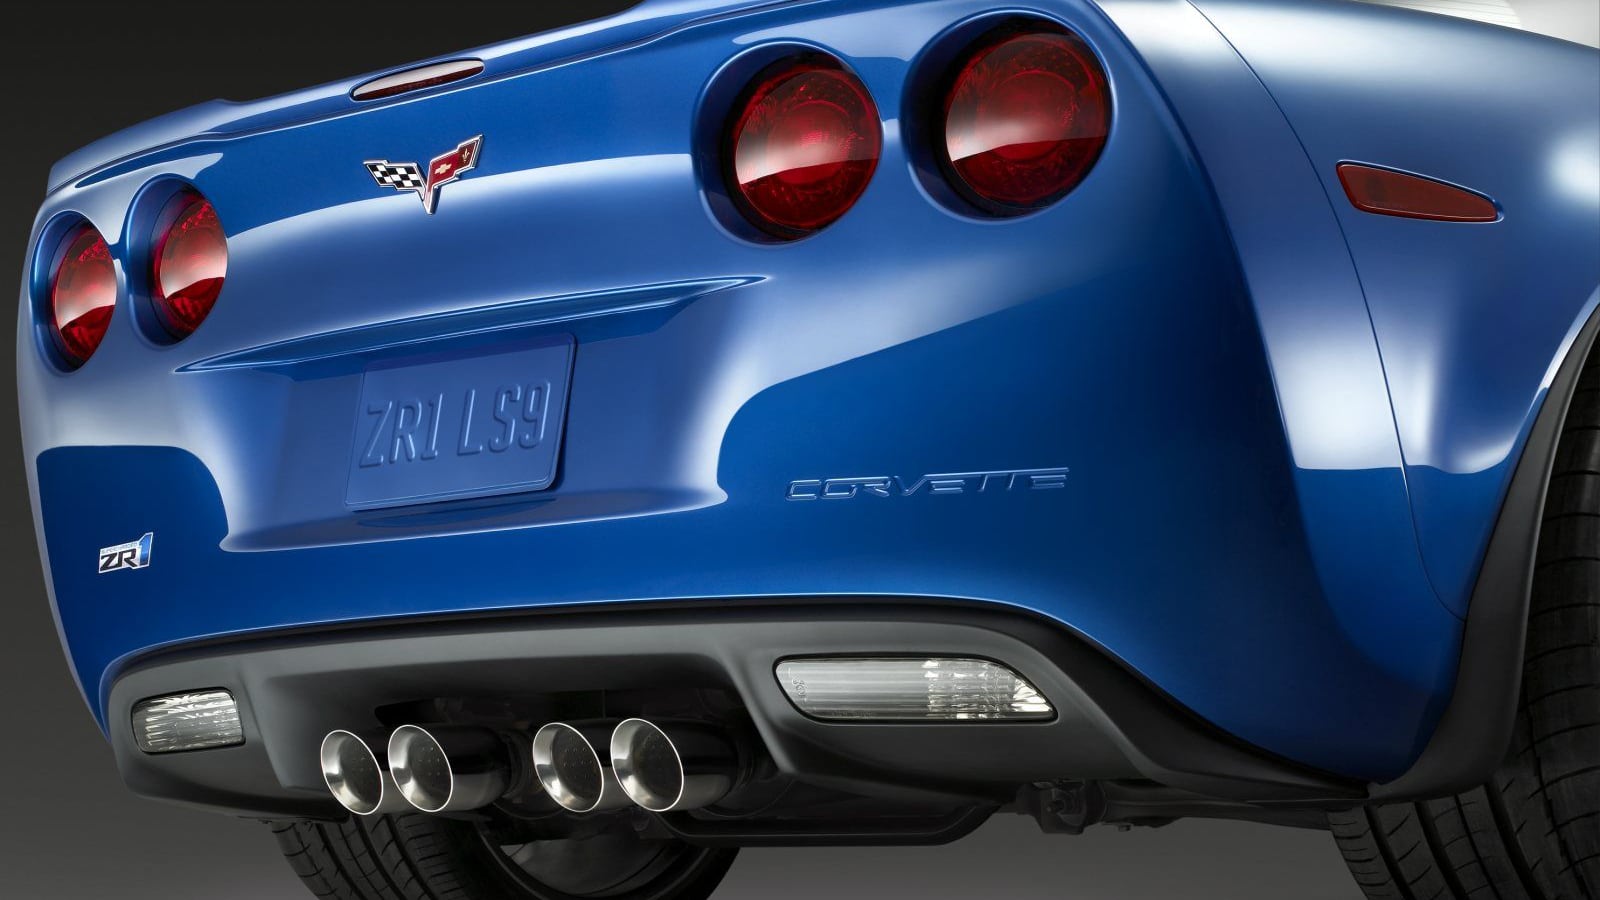 Corvette ZR1 rear end